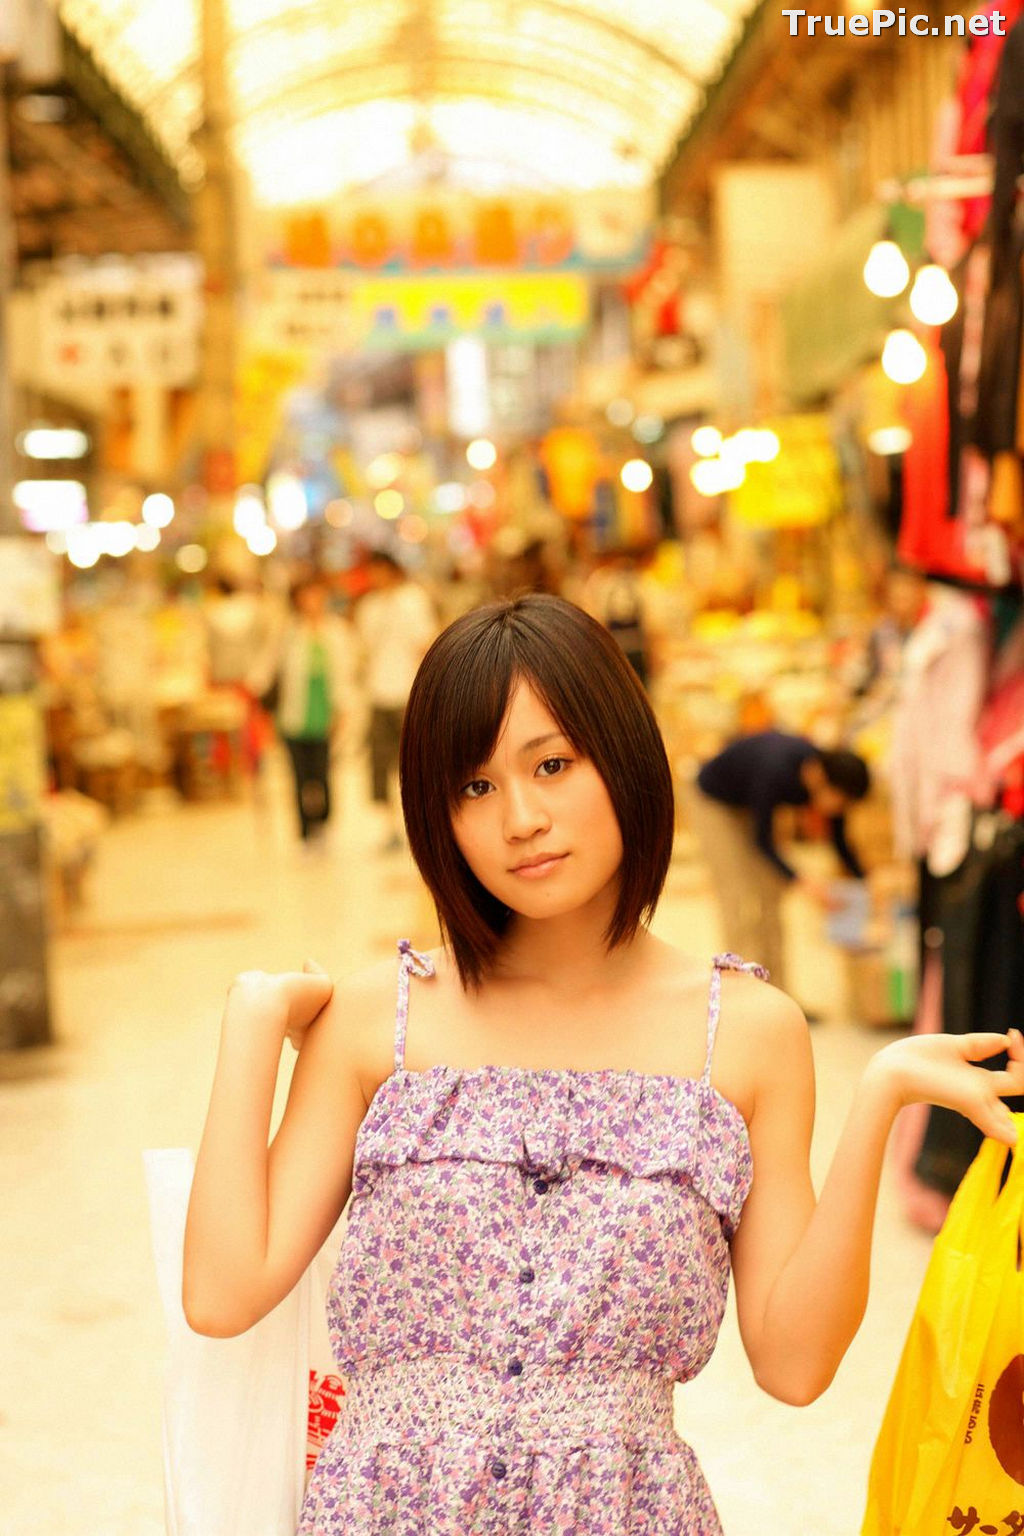 Image [YS Web] Vol.330 - Japanese Actress and Singer - Maeda Atsuko - TruePic.net - Picture-59